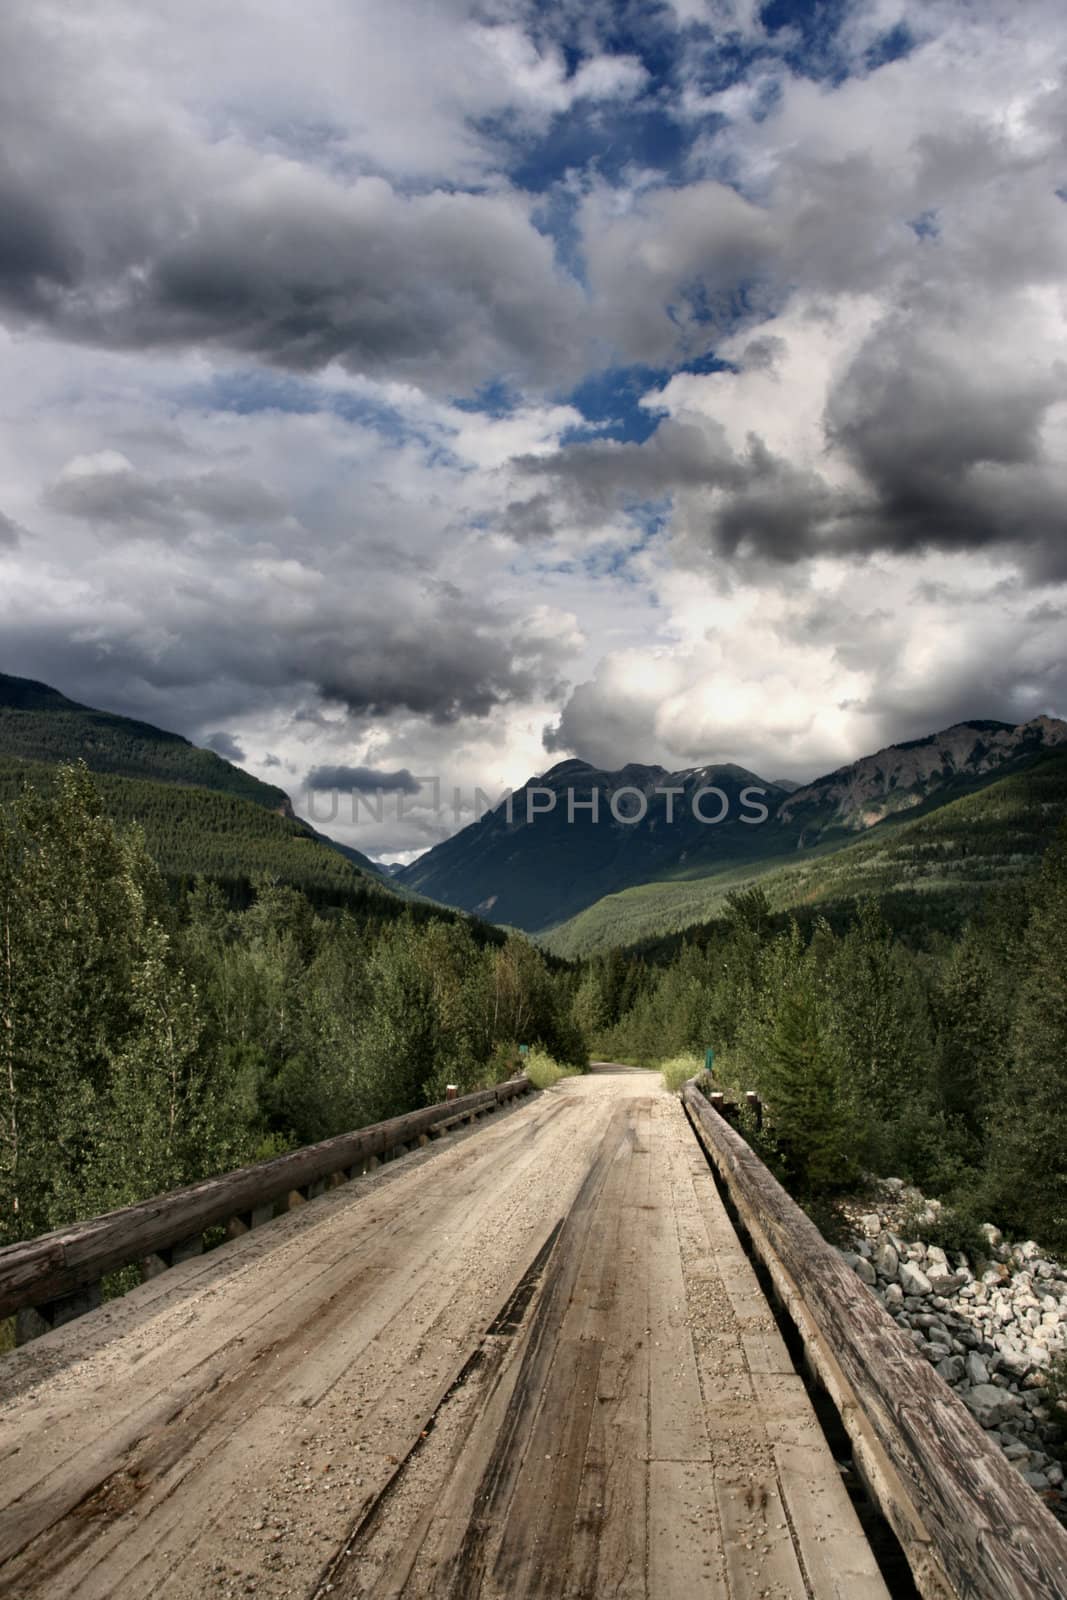 Wooden bridge and beautiful mountain landscape of Rocky Mountains in Canada. Near Kinbasket lake.